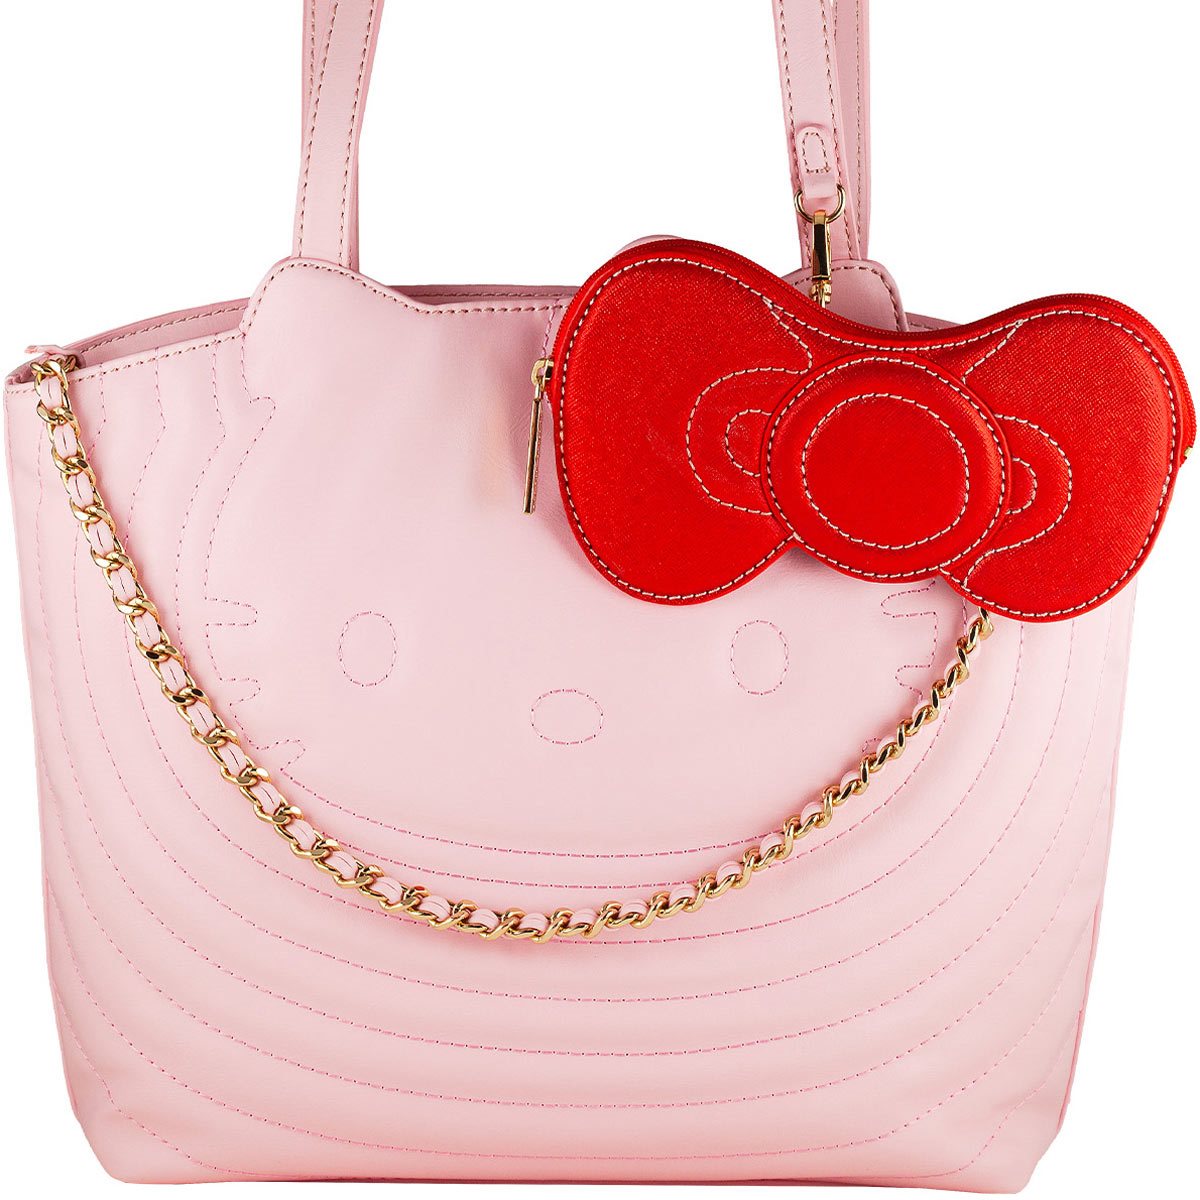 Loungefly Dusty Pink Hello Kitty Crossbody Bag